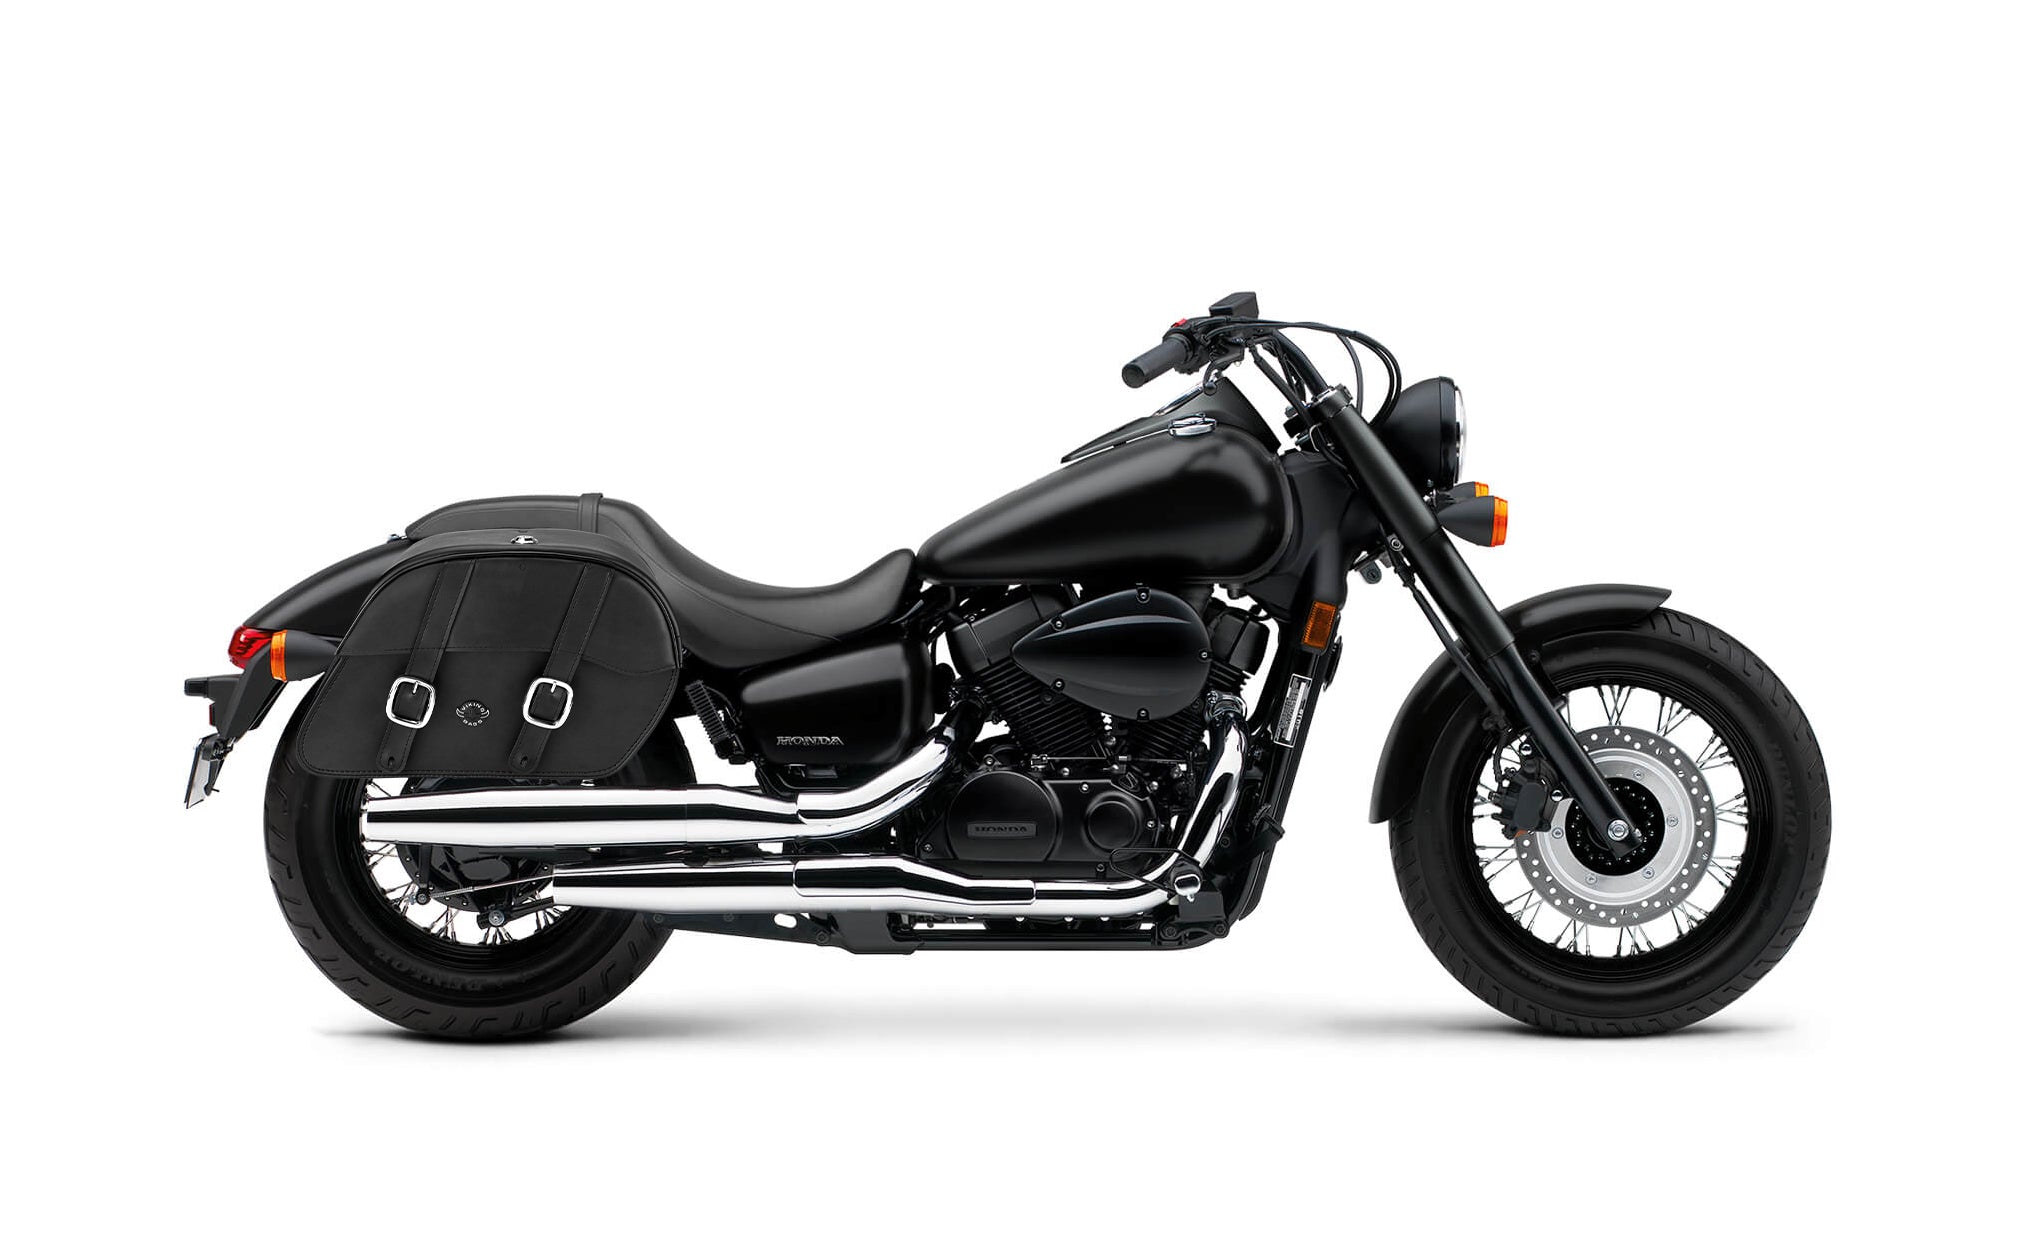 Viking Skarner Medium Lockable Honda Shadow 750 Phantom Leather Motorcycle Saddlebags on Bike Photo @expand